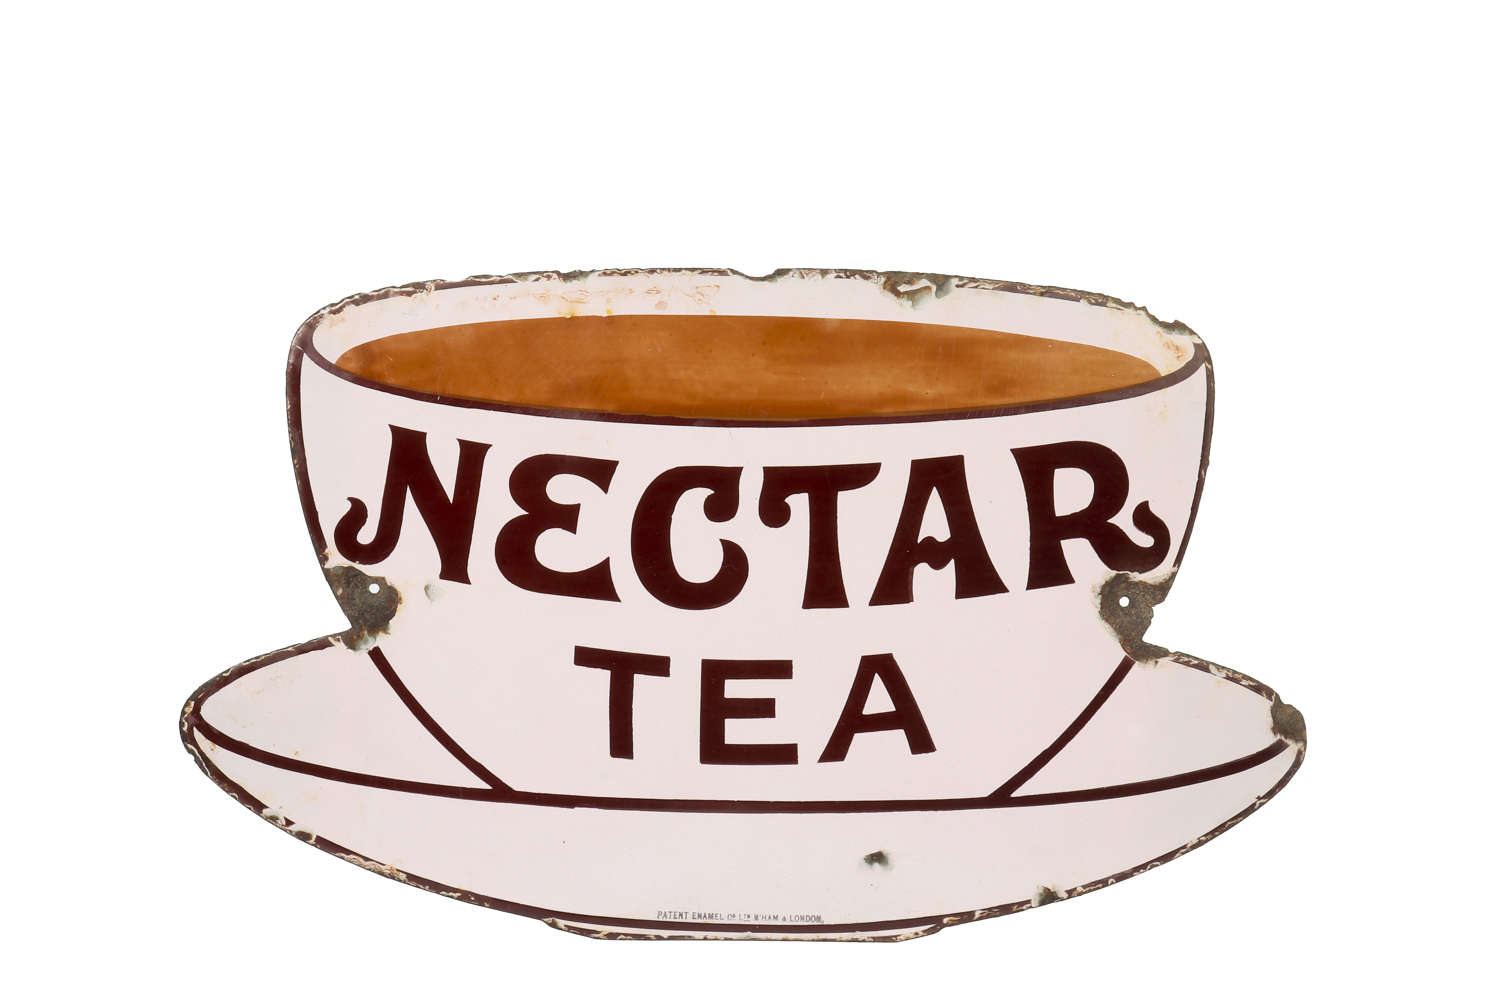 Original enamel advertising sign for Nectar Tea